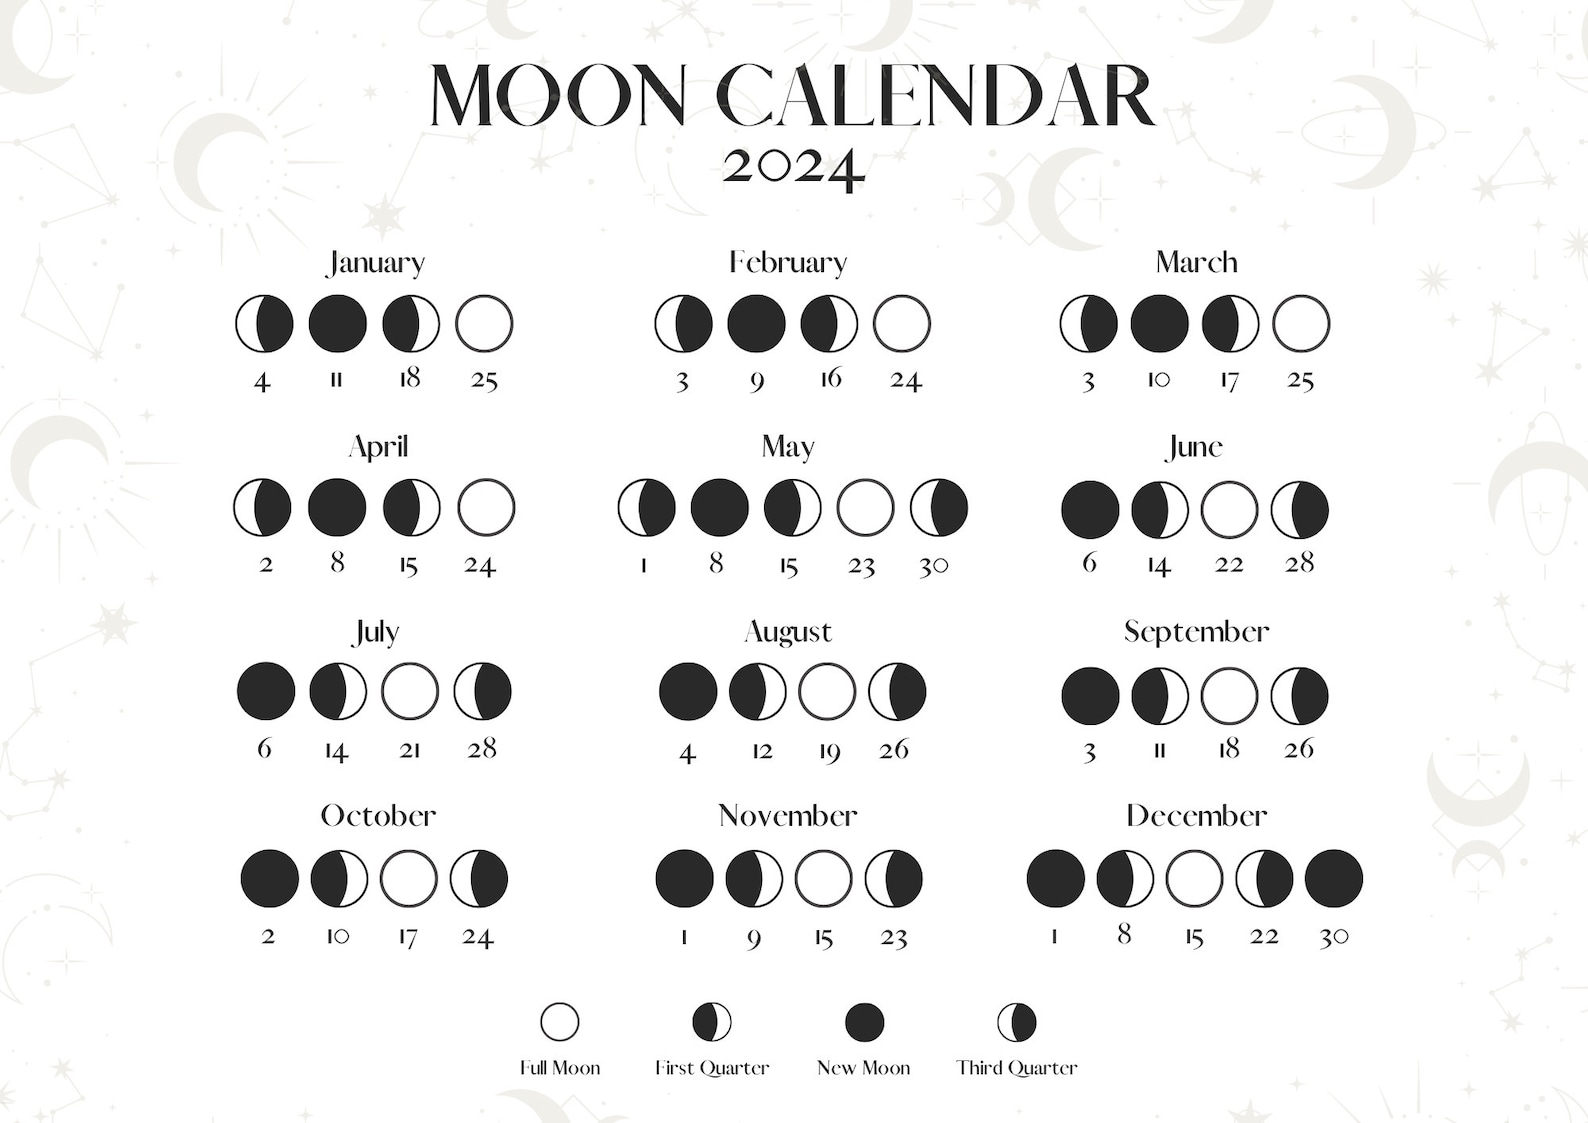 Moon Calendar 2024 Moon Phases Lunar Calendar Printable in A4 Size Png